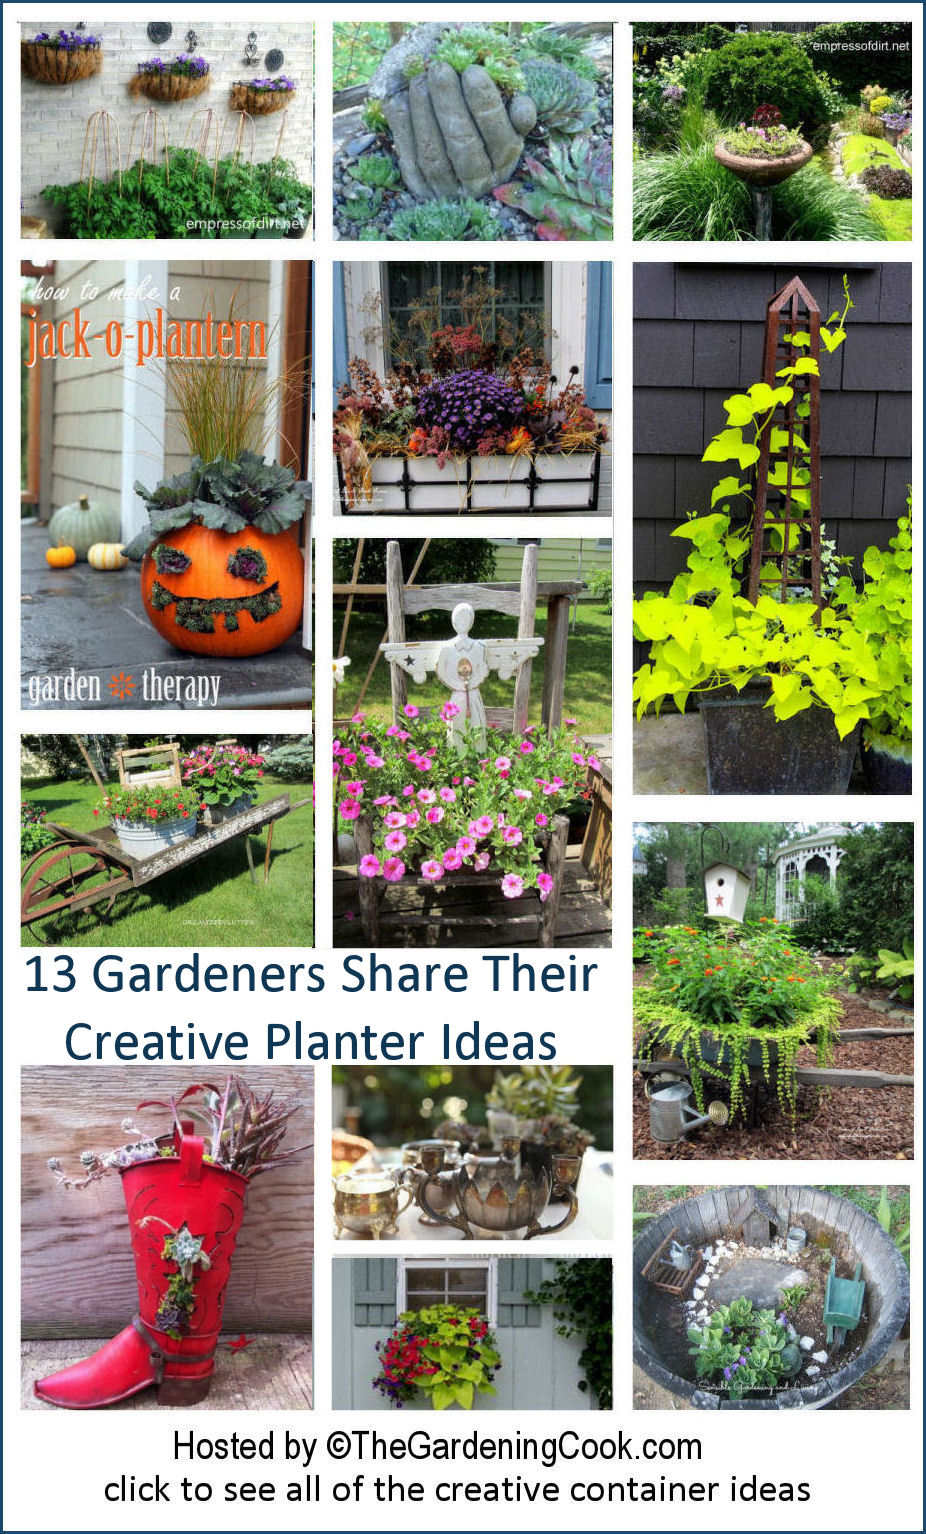 Creative Garden Planters – Garden Bloggers បានចែករំលែក ព្រឹត្តិការណ៍ របស់ Creative Planter Ideas